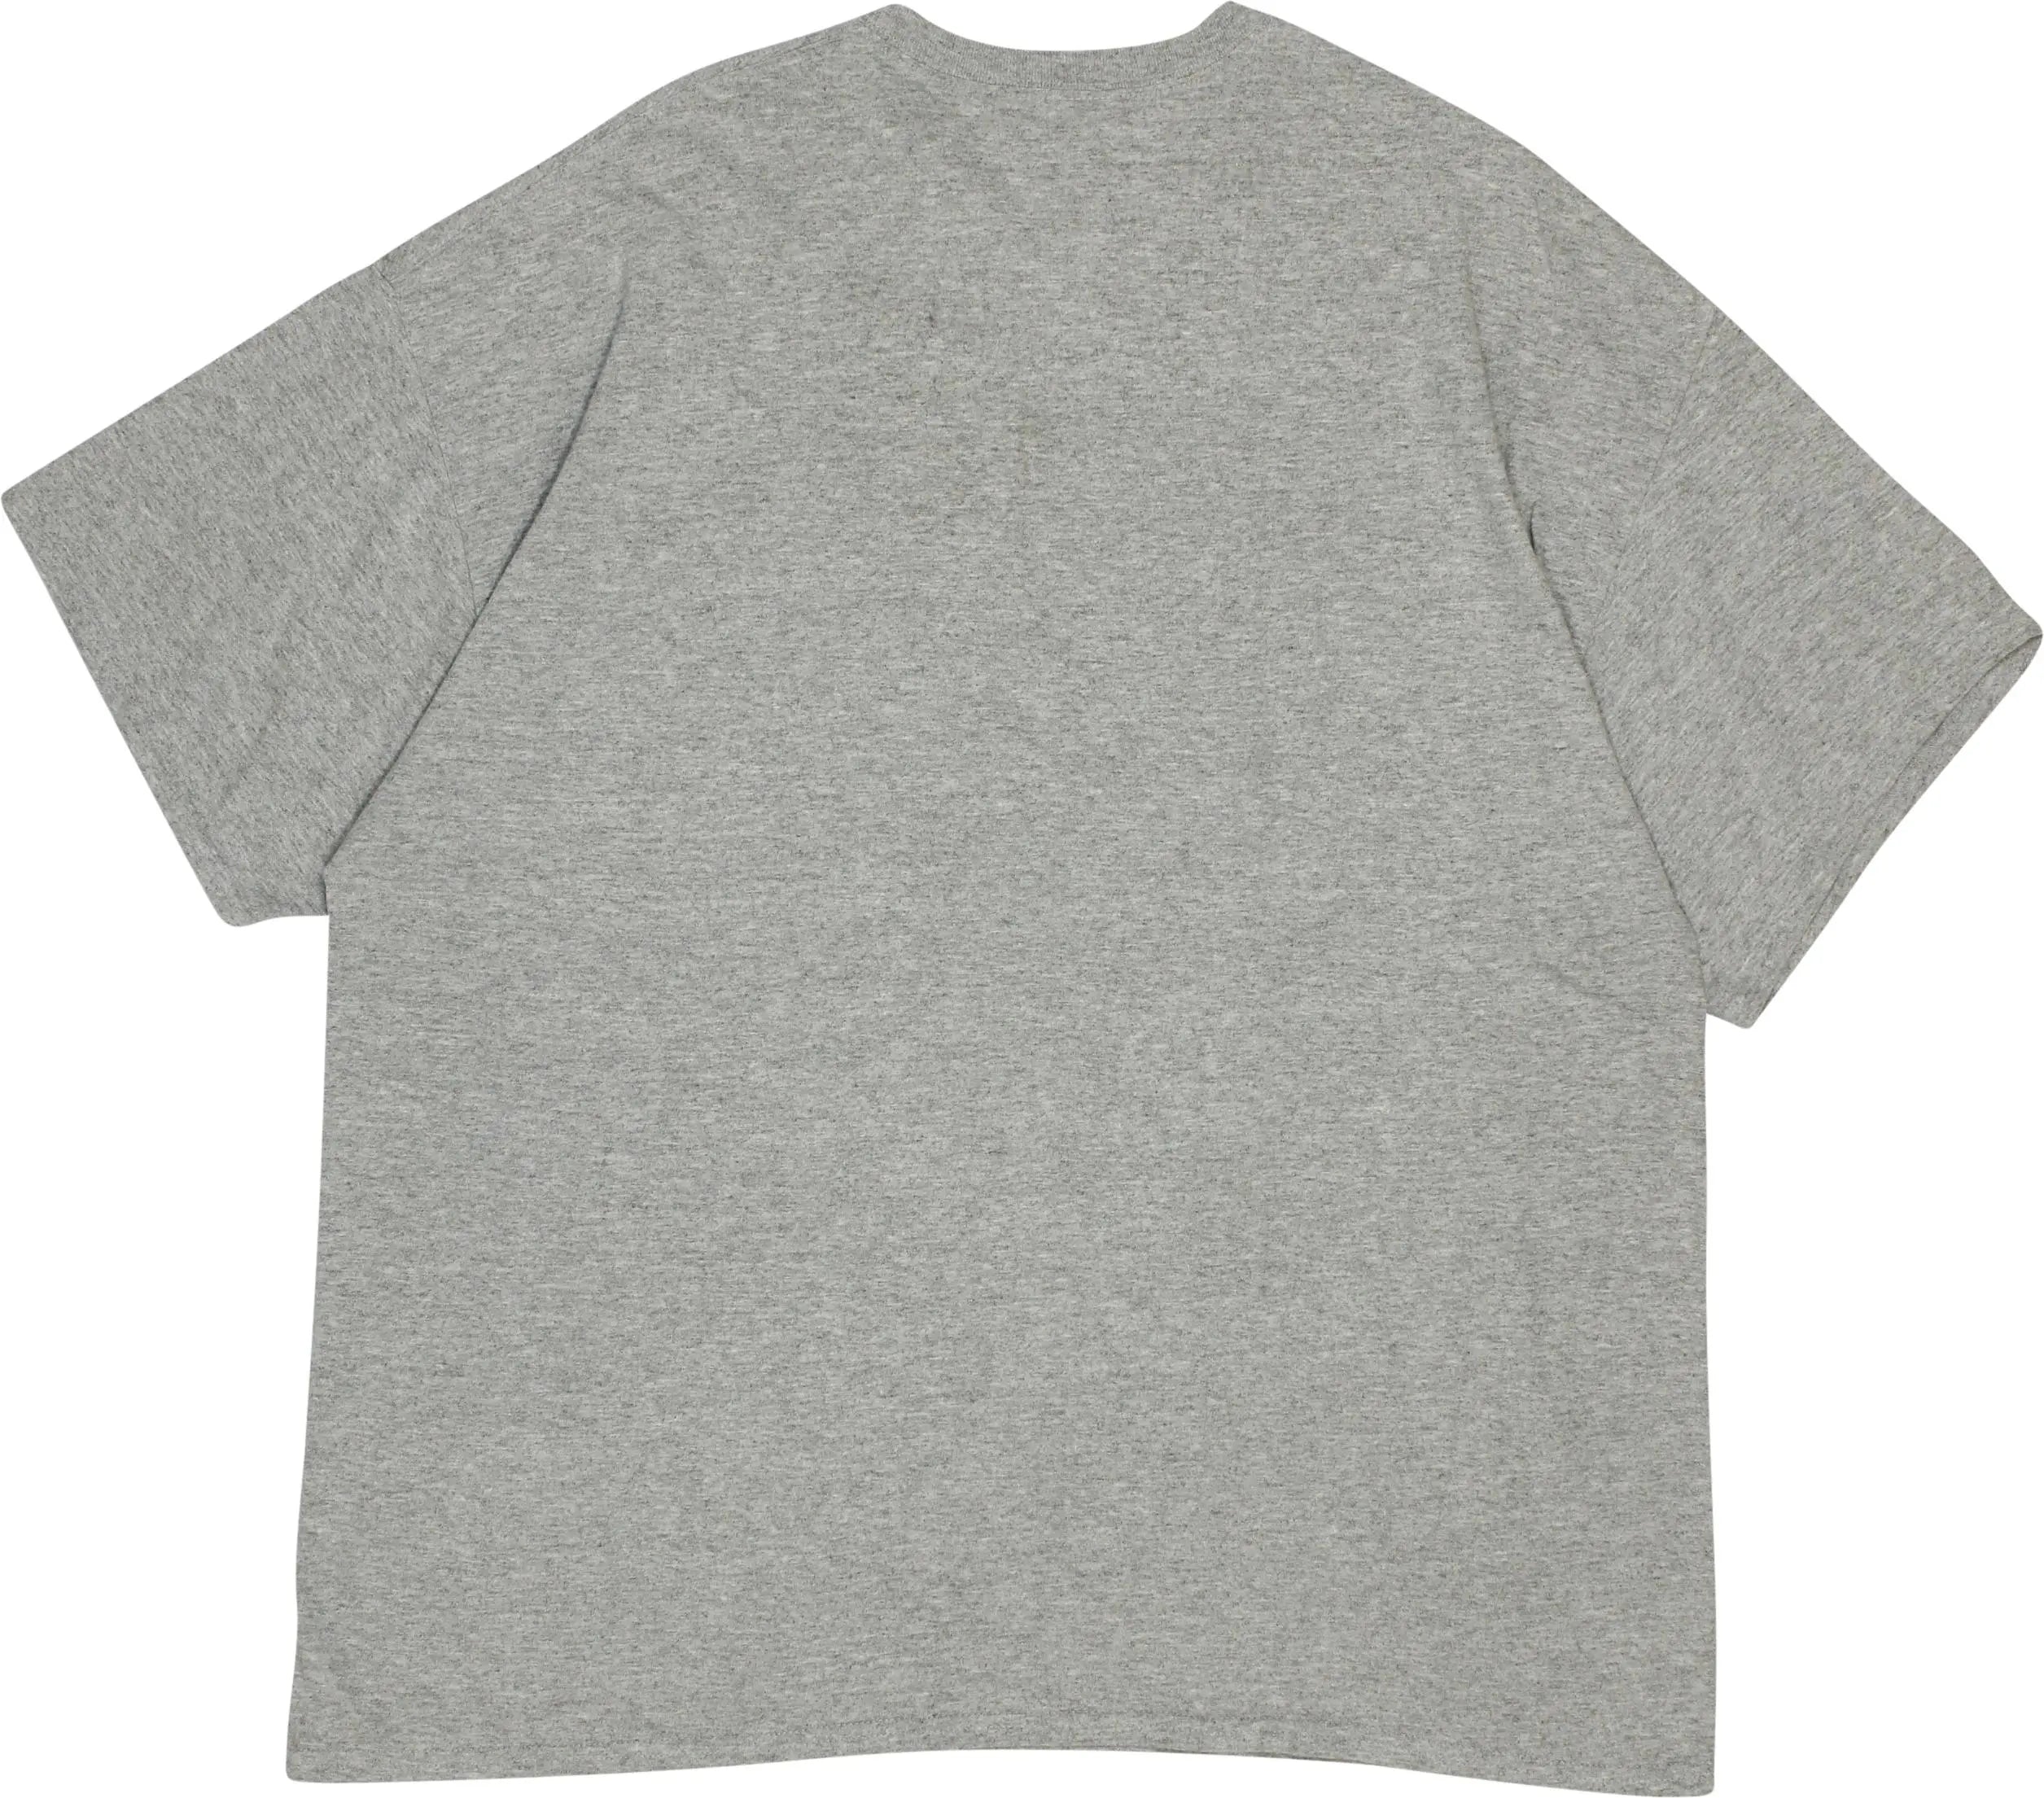 Gildan - Montana T-Shirt- ThriftTale.com - Vintage and second handclothing